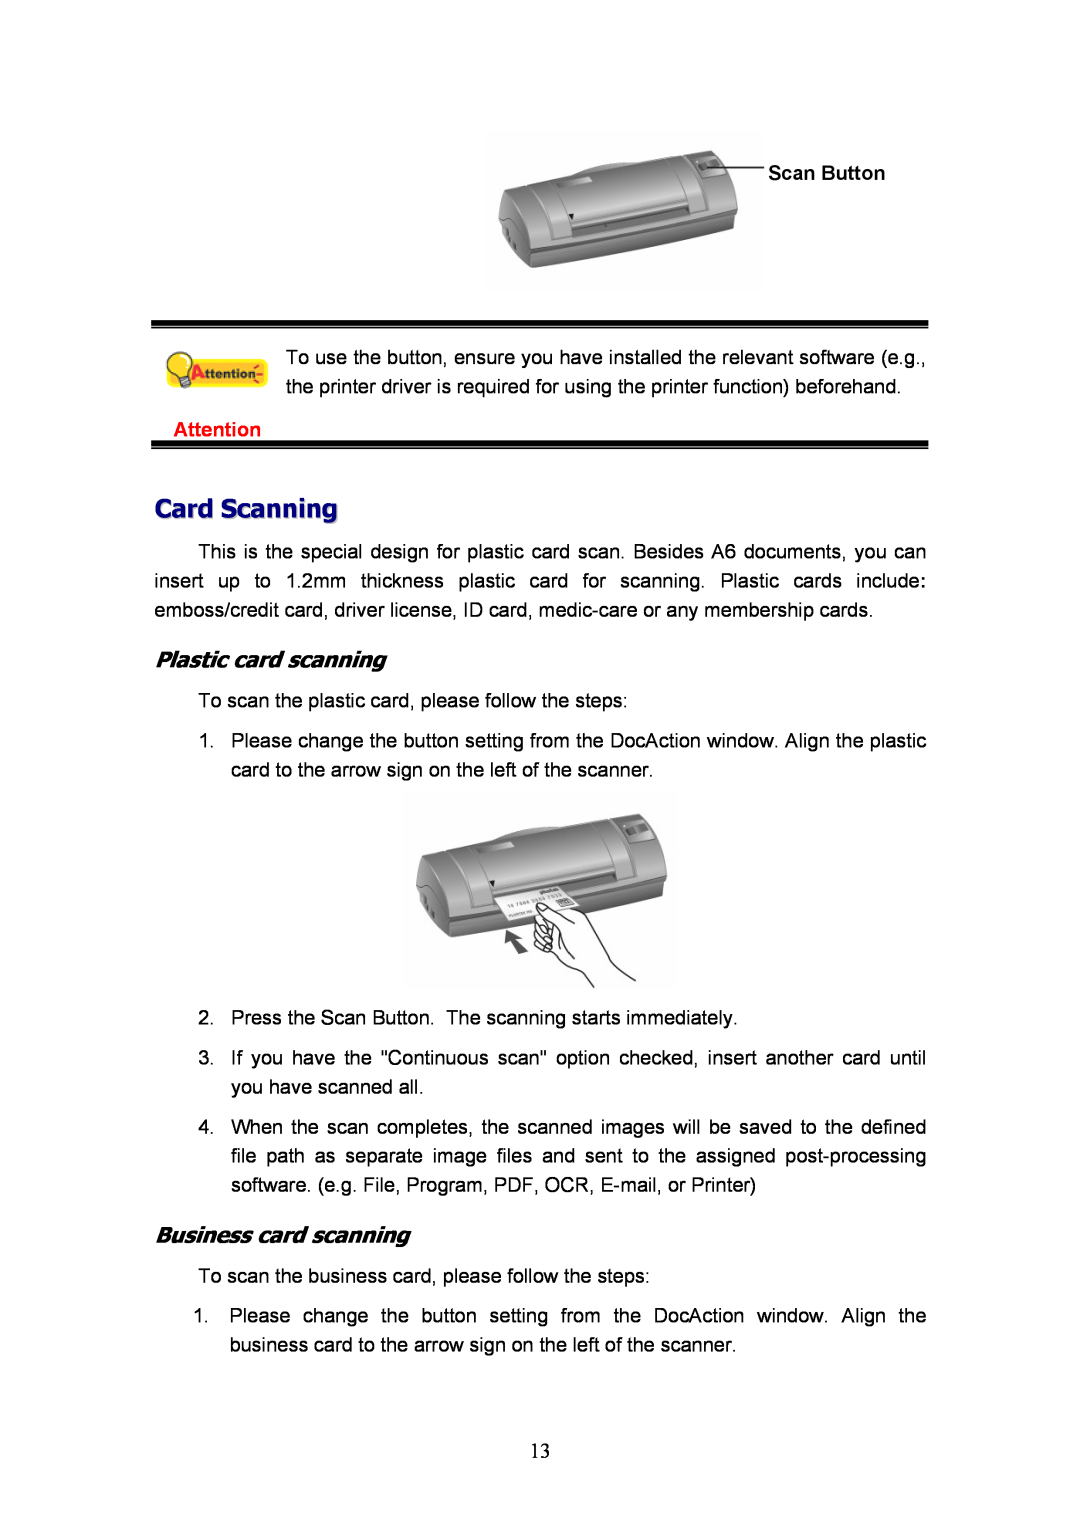 Plustek MobileOffice Scanner, D600 manual Card Scanning, Plastic card scanning, Business card scanning 